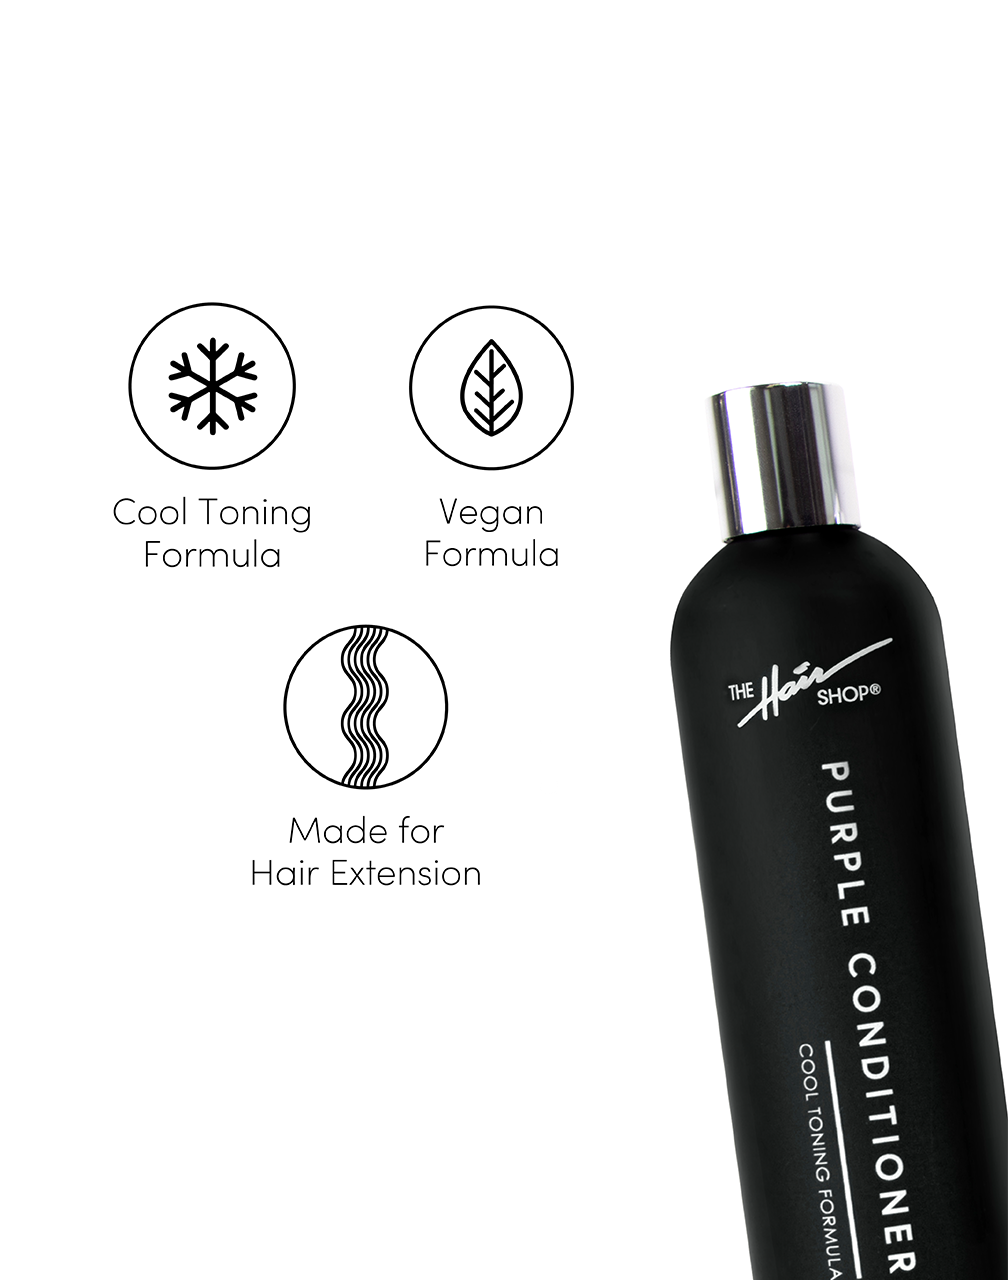 Purple Conditioner. Cool toning formula. Vegan formula. Made for hair extension.